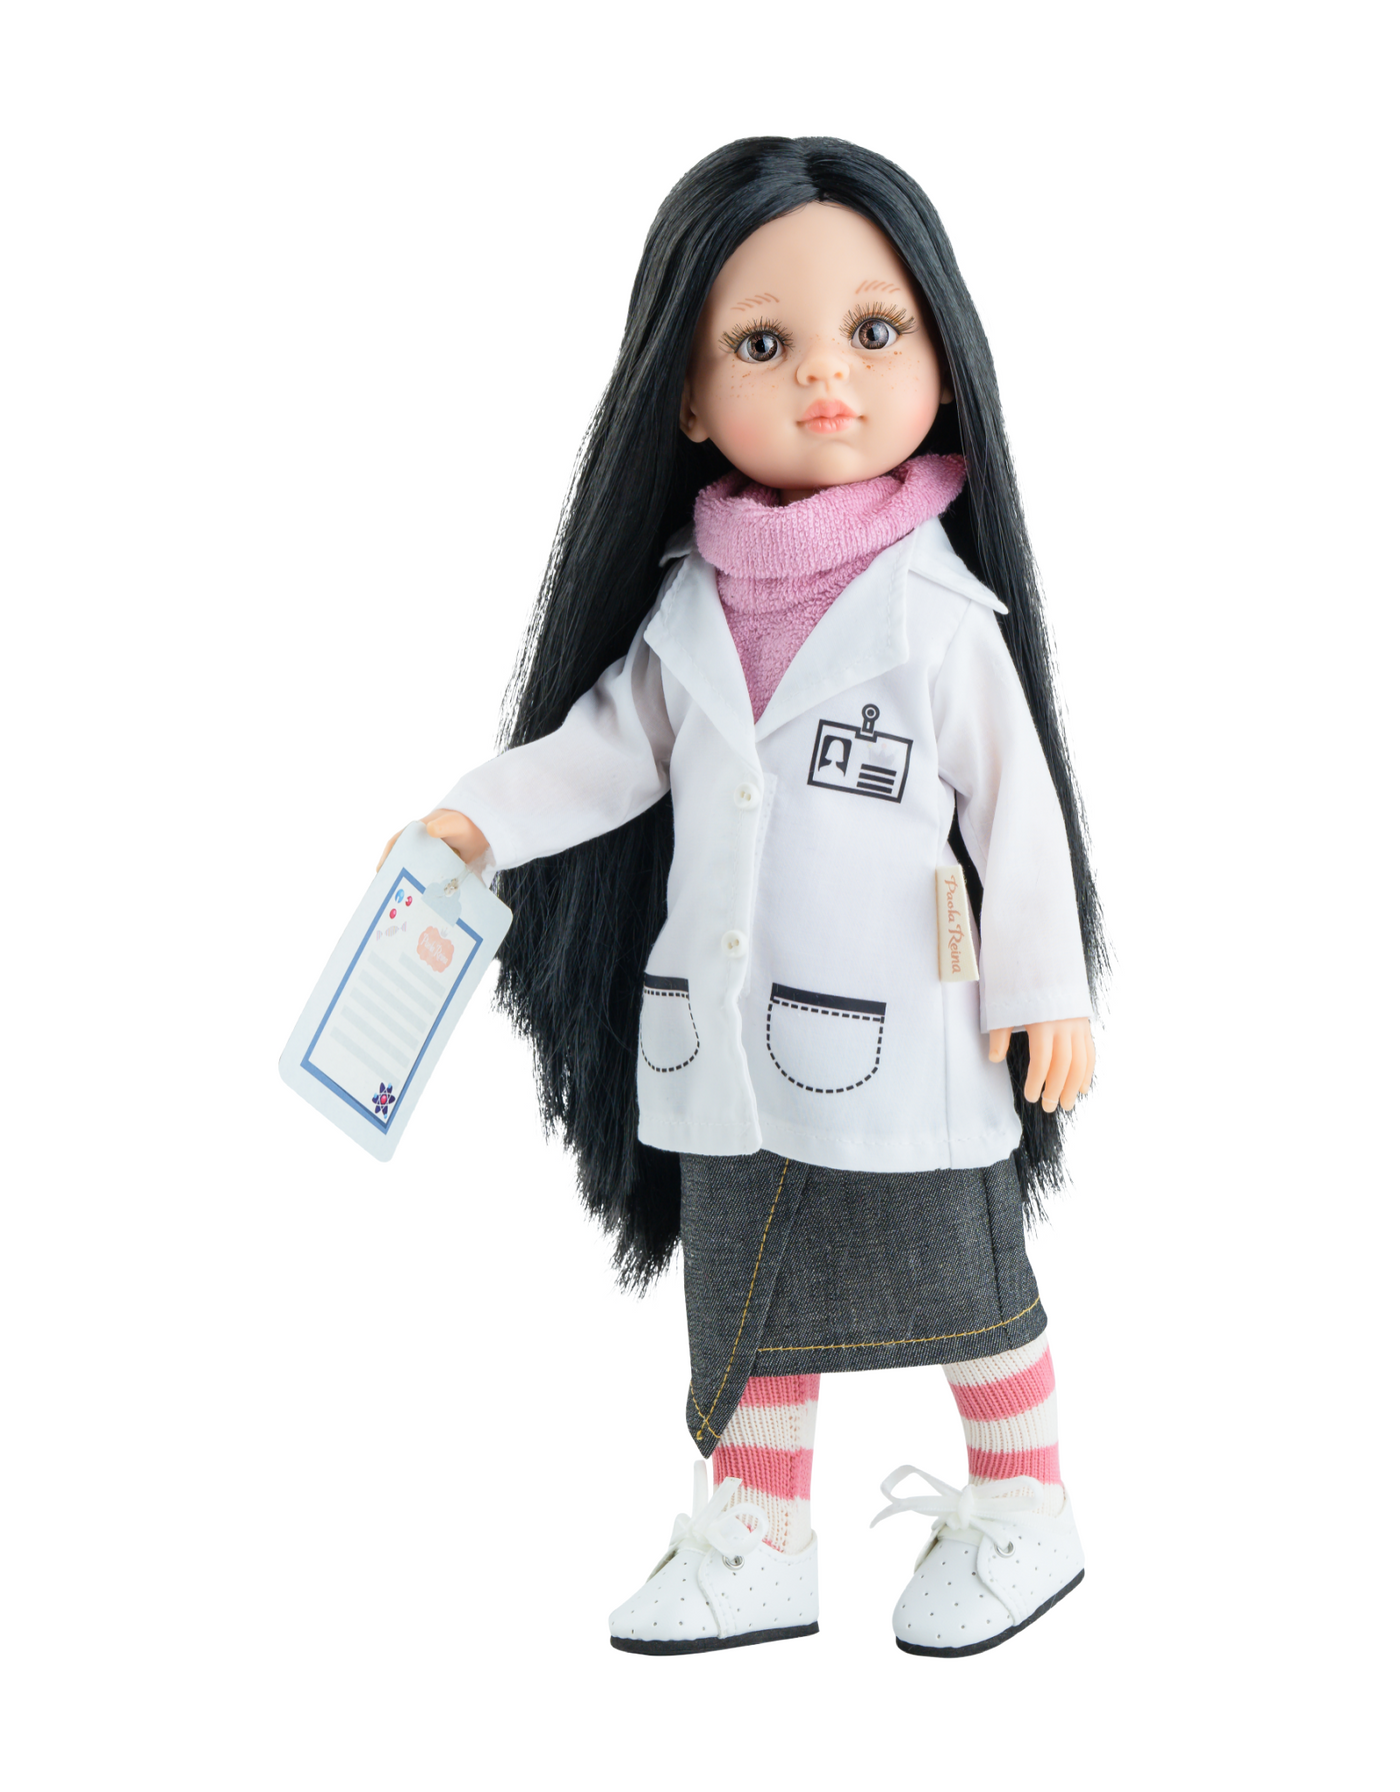 Las Amigas doll - Carol the scientist - Paola Reina